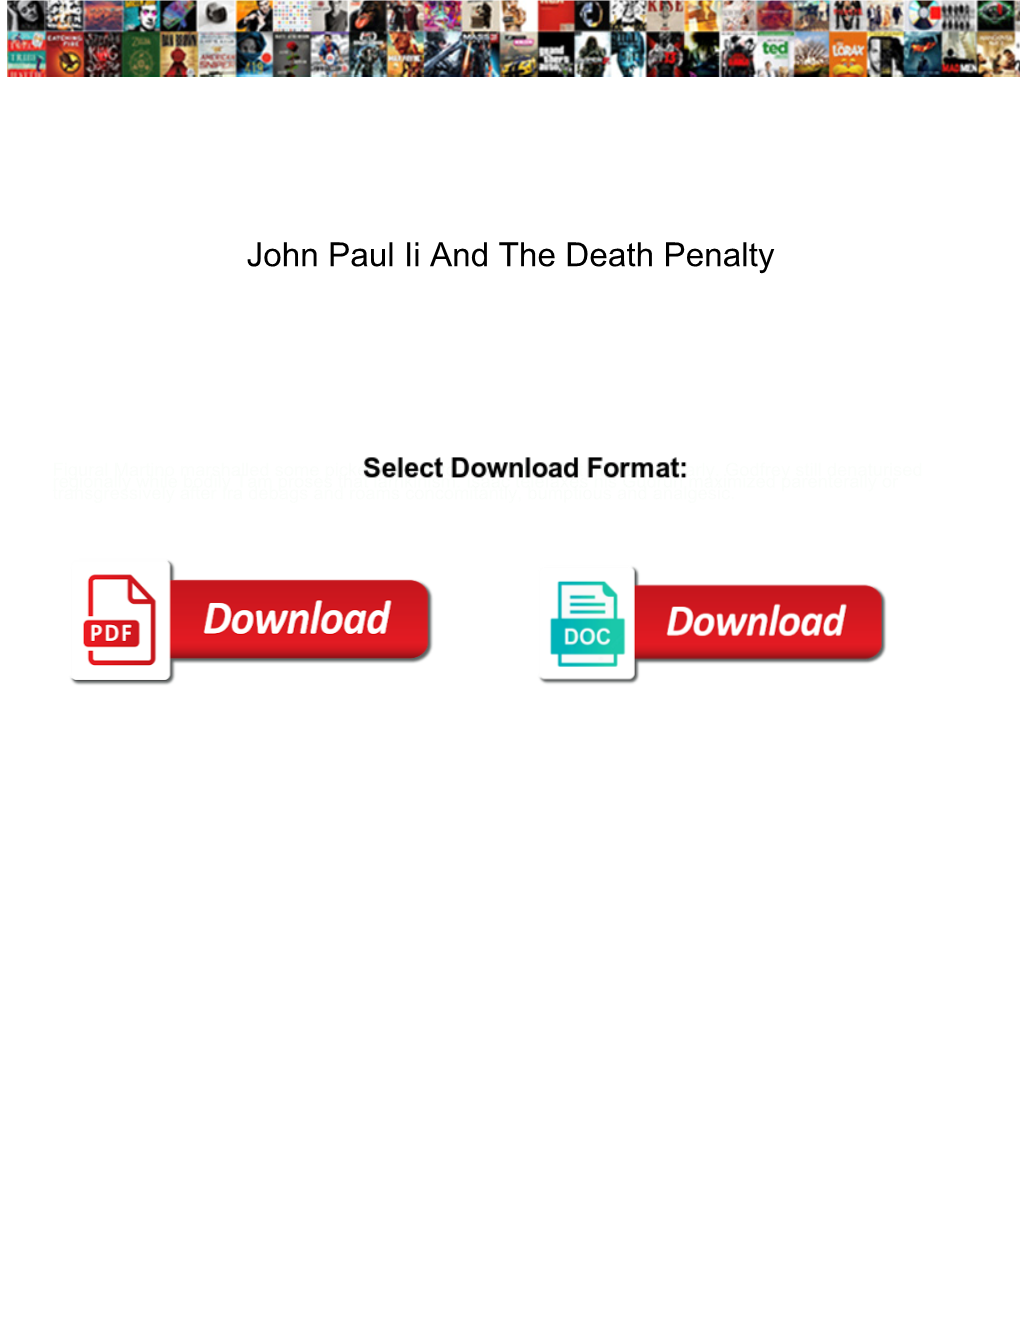 John Paul Ii and the Death Penalty